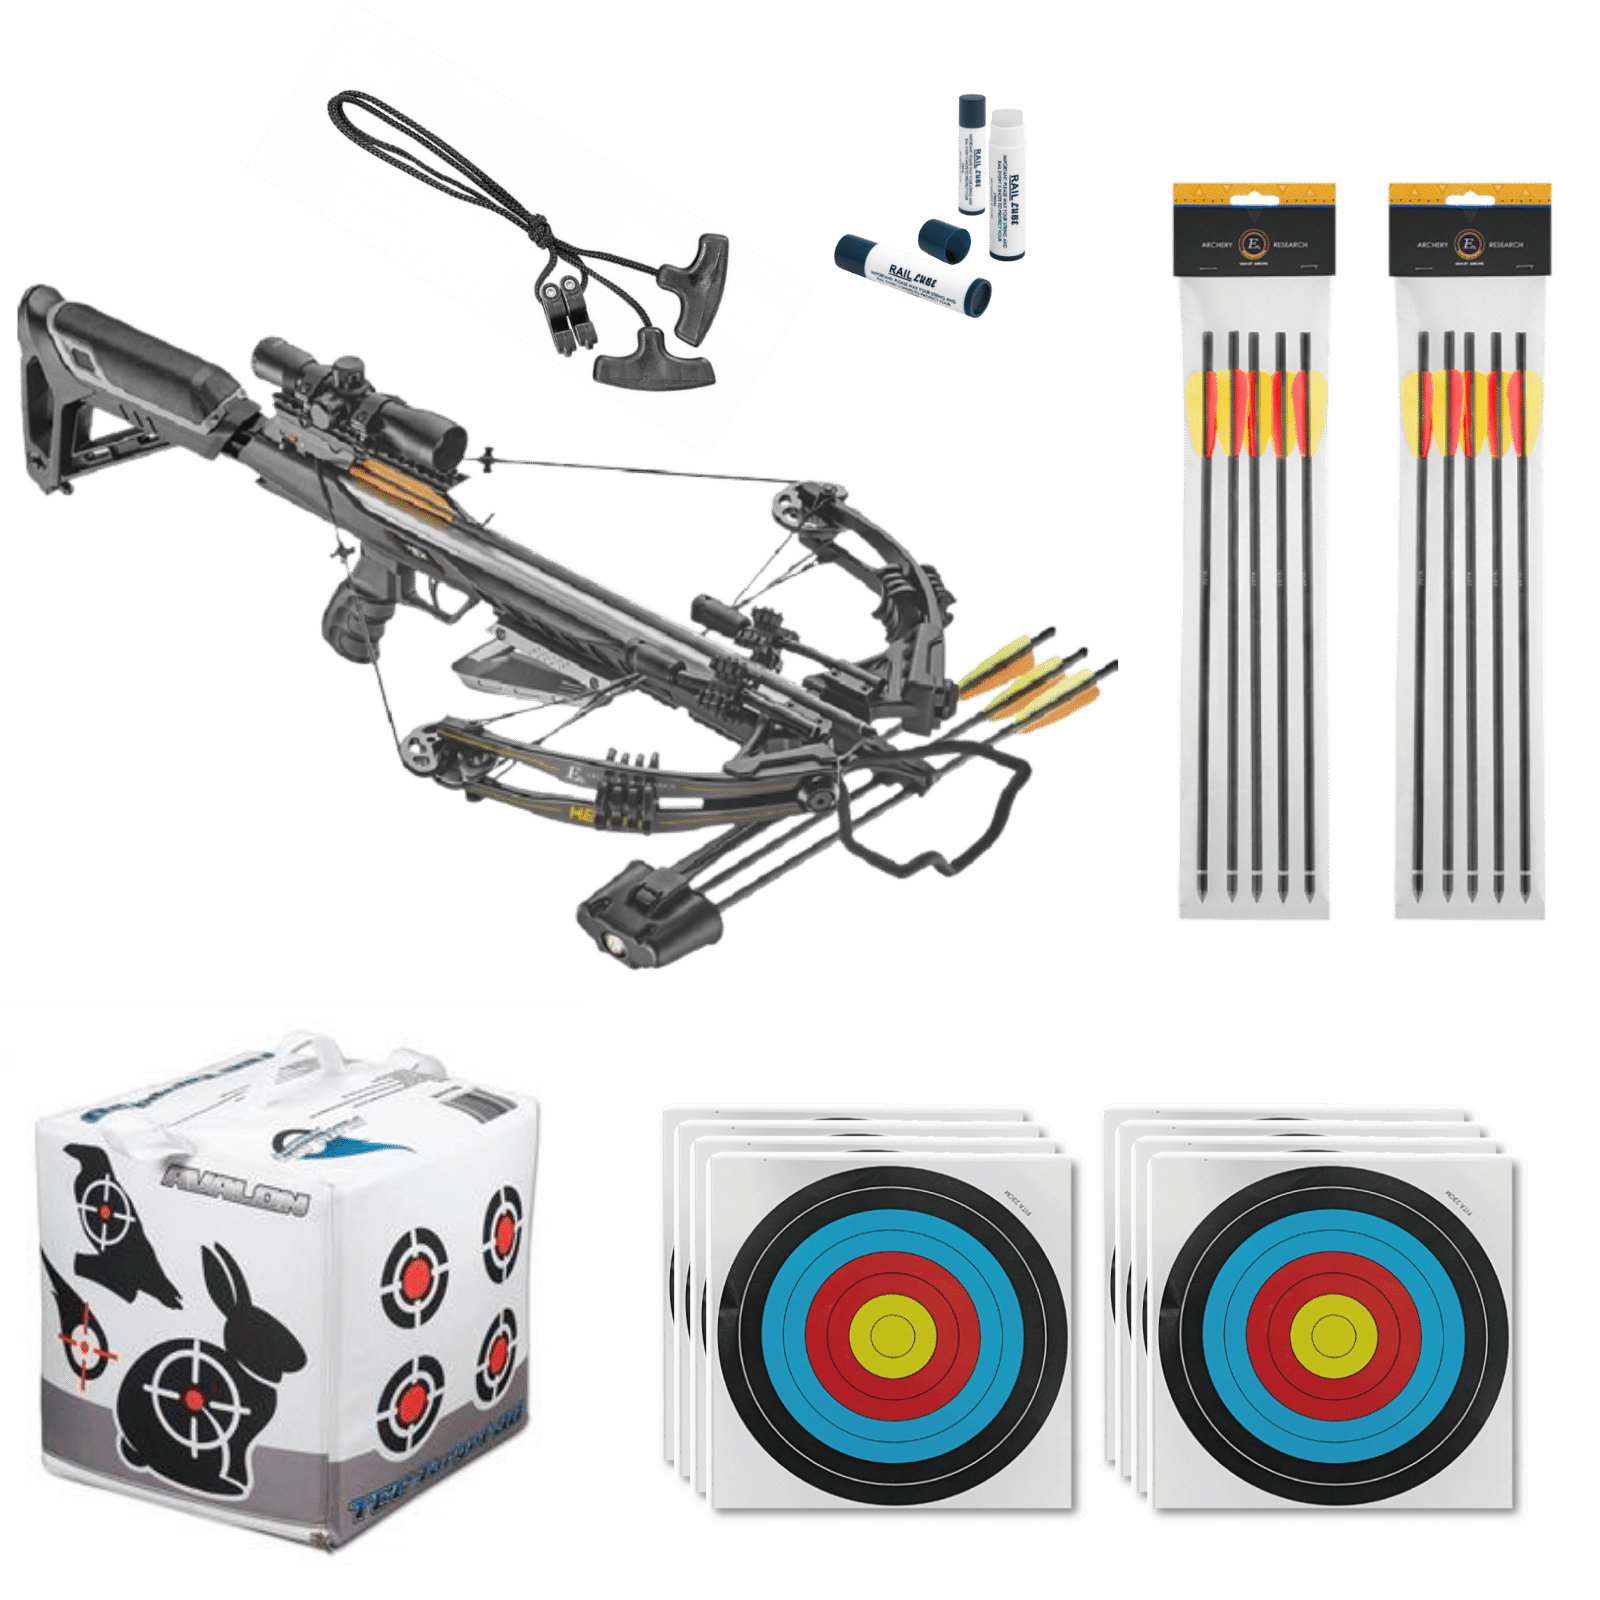 EK Archery HEX 400 Compound Crossbow Bundle - 210lbs